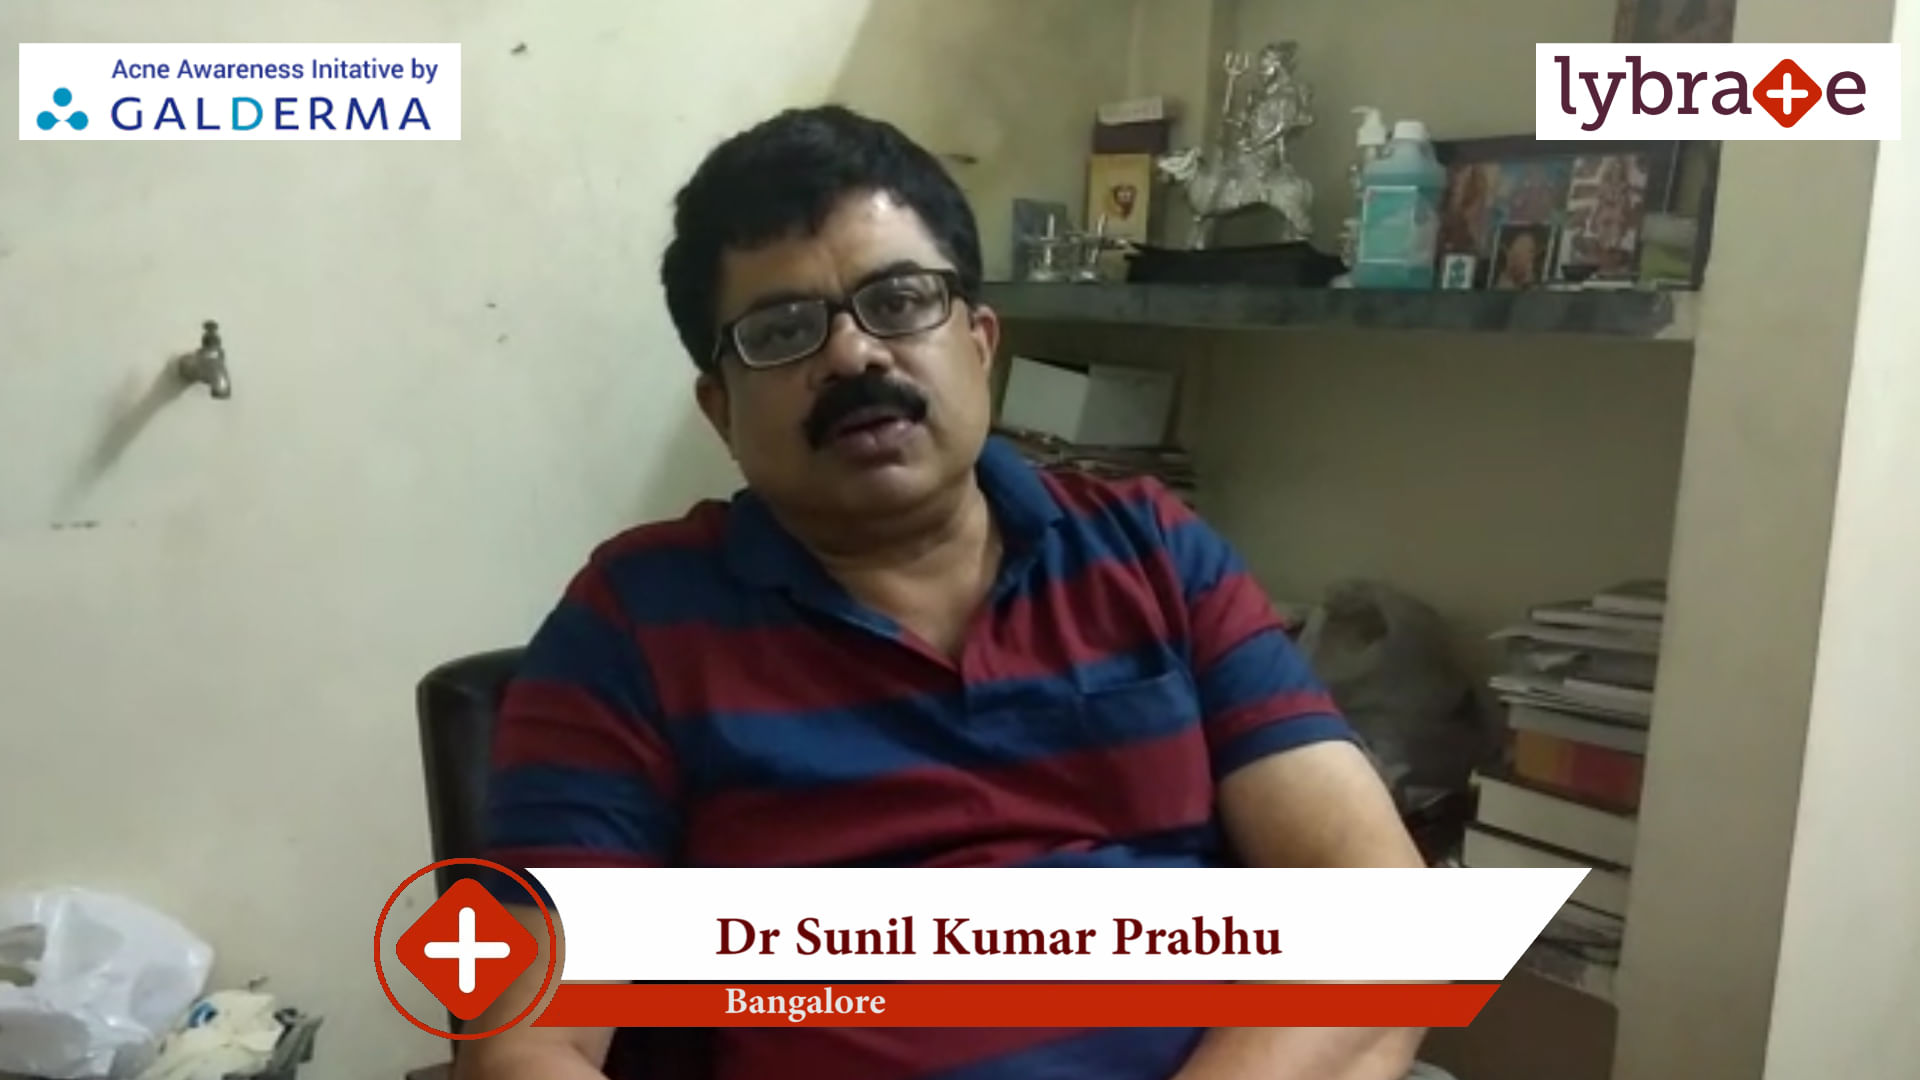 Lybrate | Dr. Sunil Kumar Prabhu speaks on IMPORTANCE OF TREATING ACNE EARLY